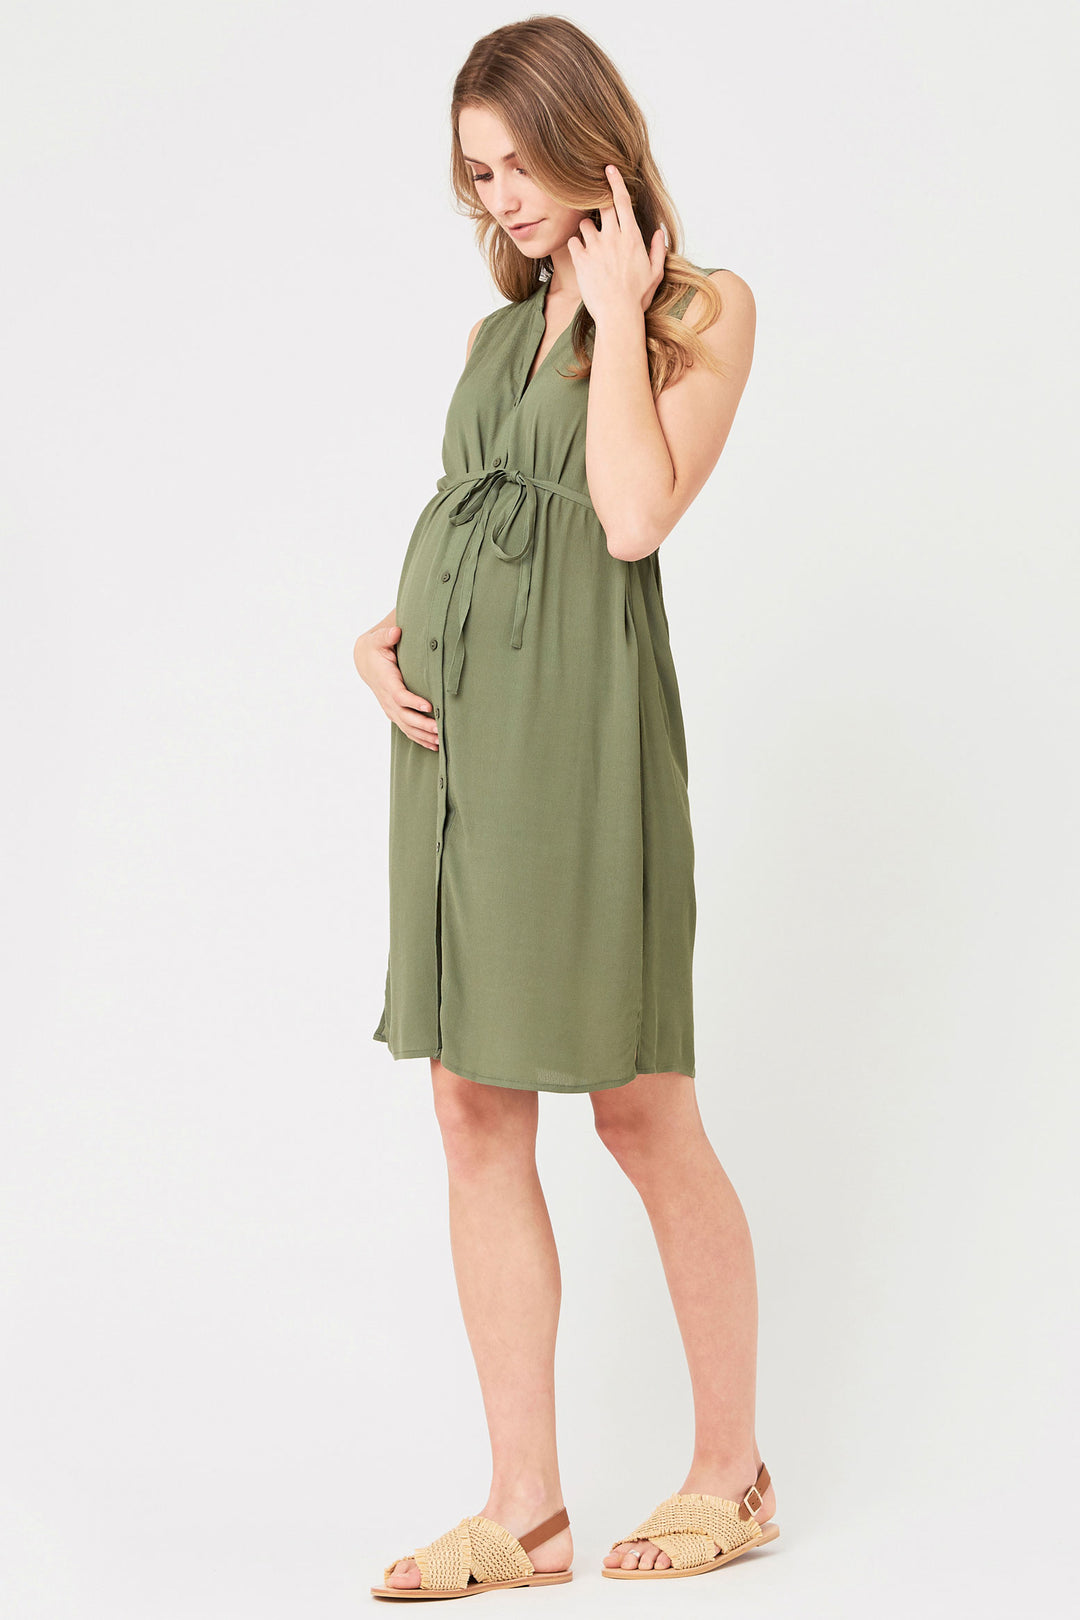 April Maternity Nursing Dress by Ripe